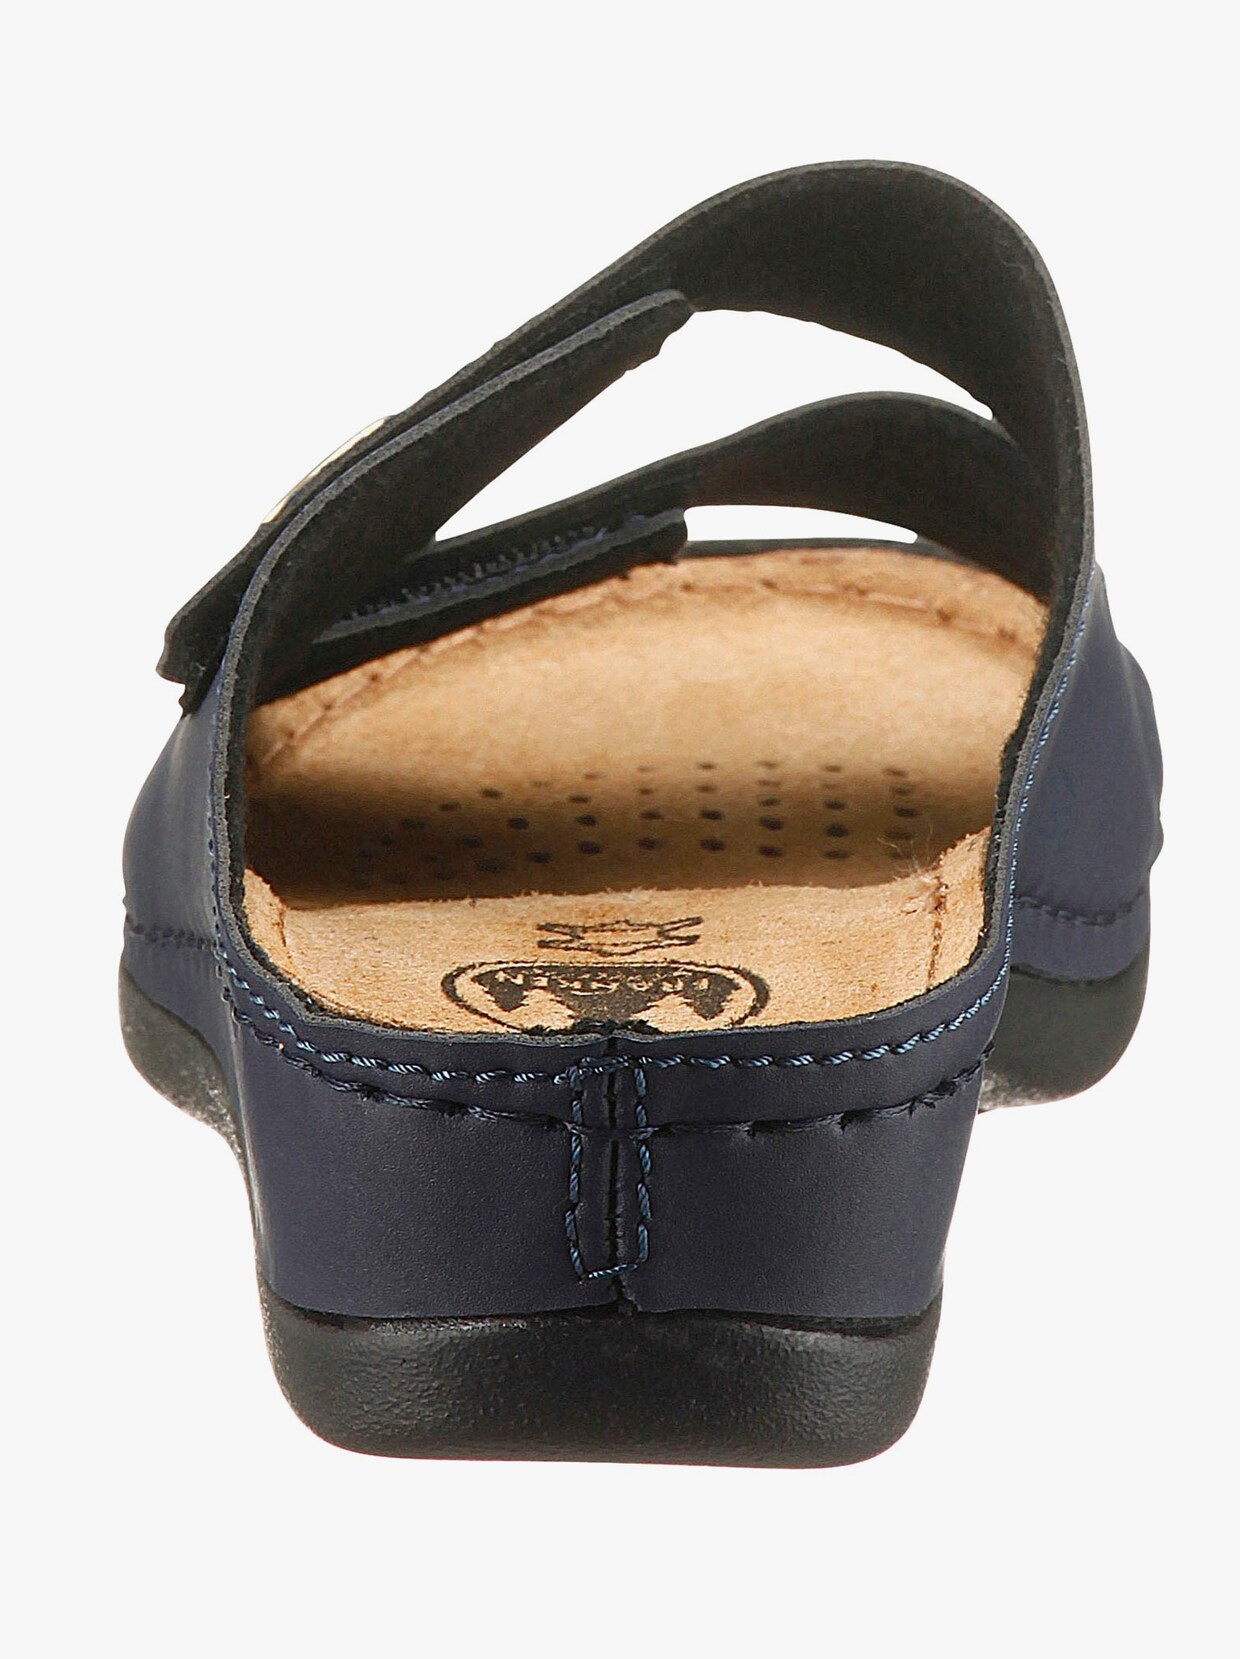 Franken Schuhe slippers - marine